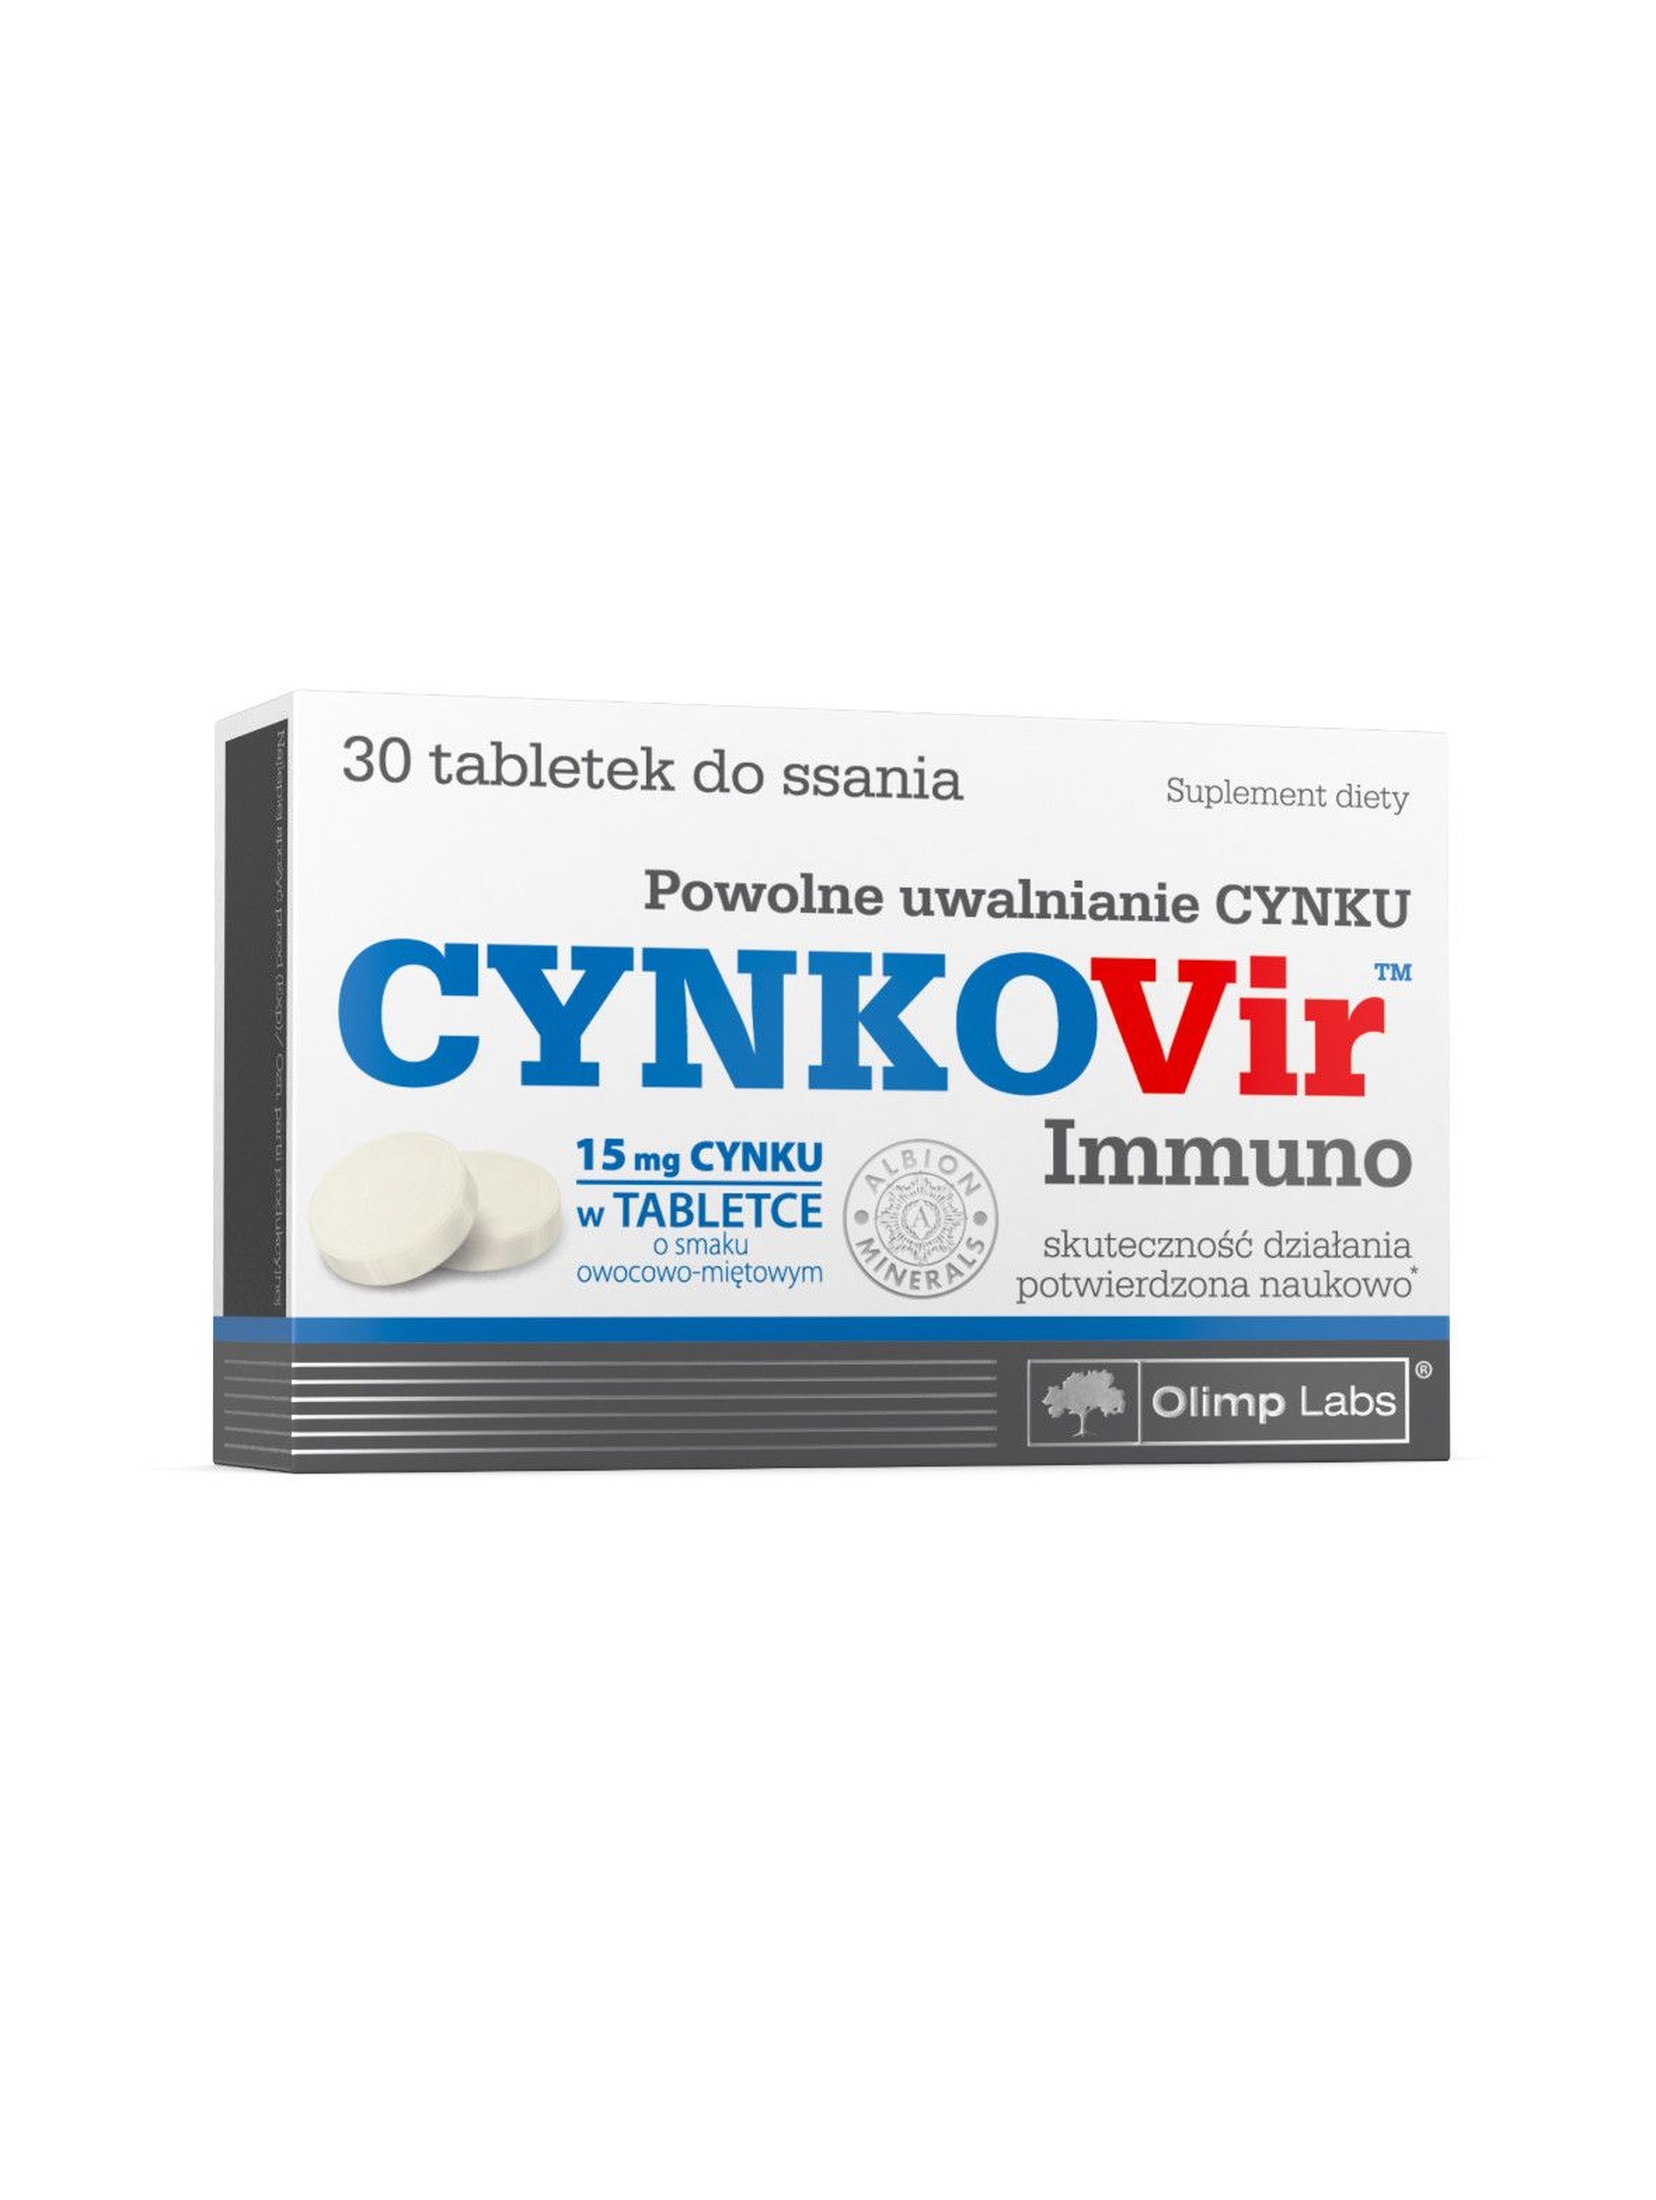 Cynkovir Immuno 30 tabletek do ssania